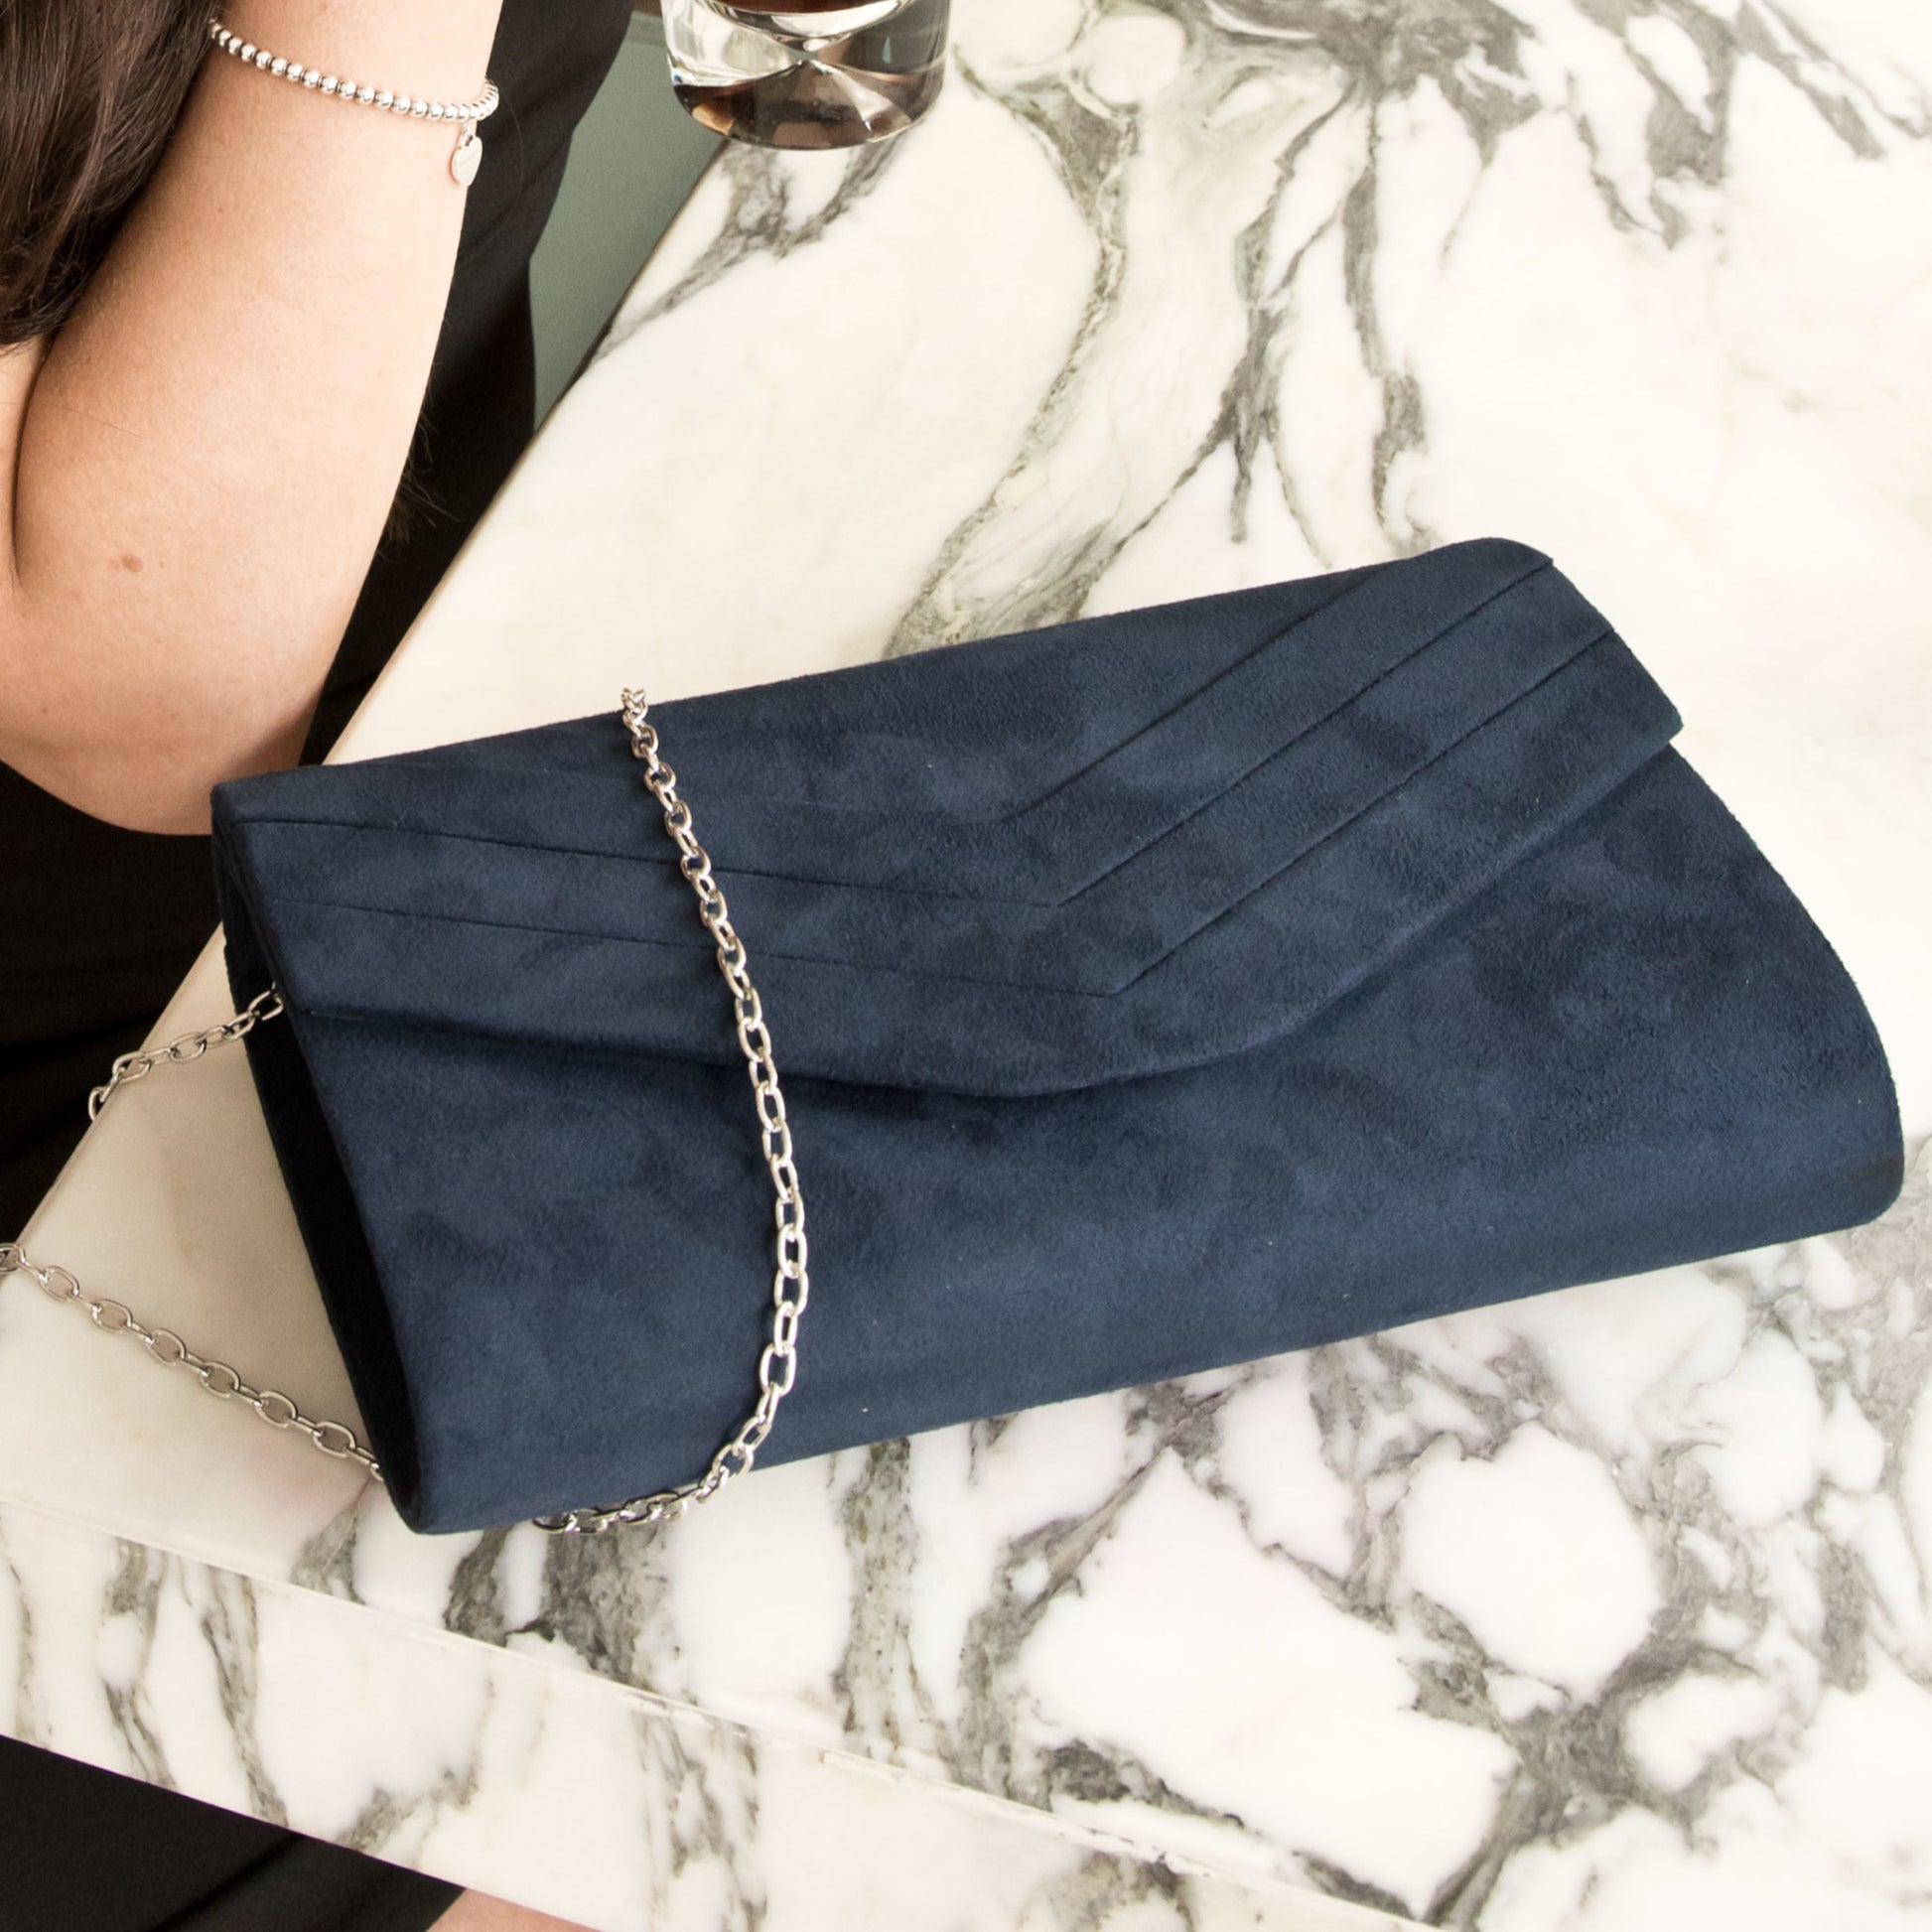 SWANKYSWANS Samantha V Detail Clutch Bag Navy Blue Cute Cheap Clutch Bag For Weddings School and Work